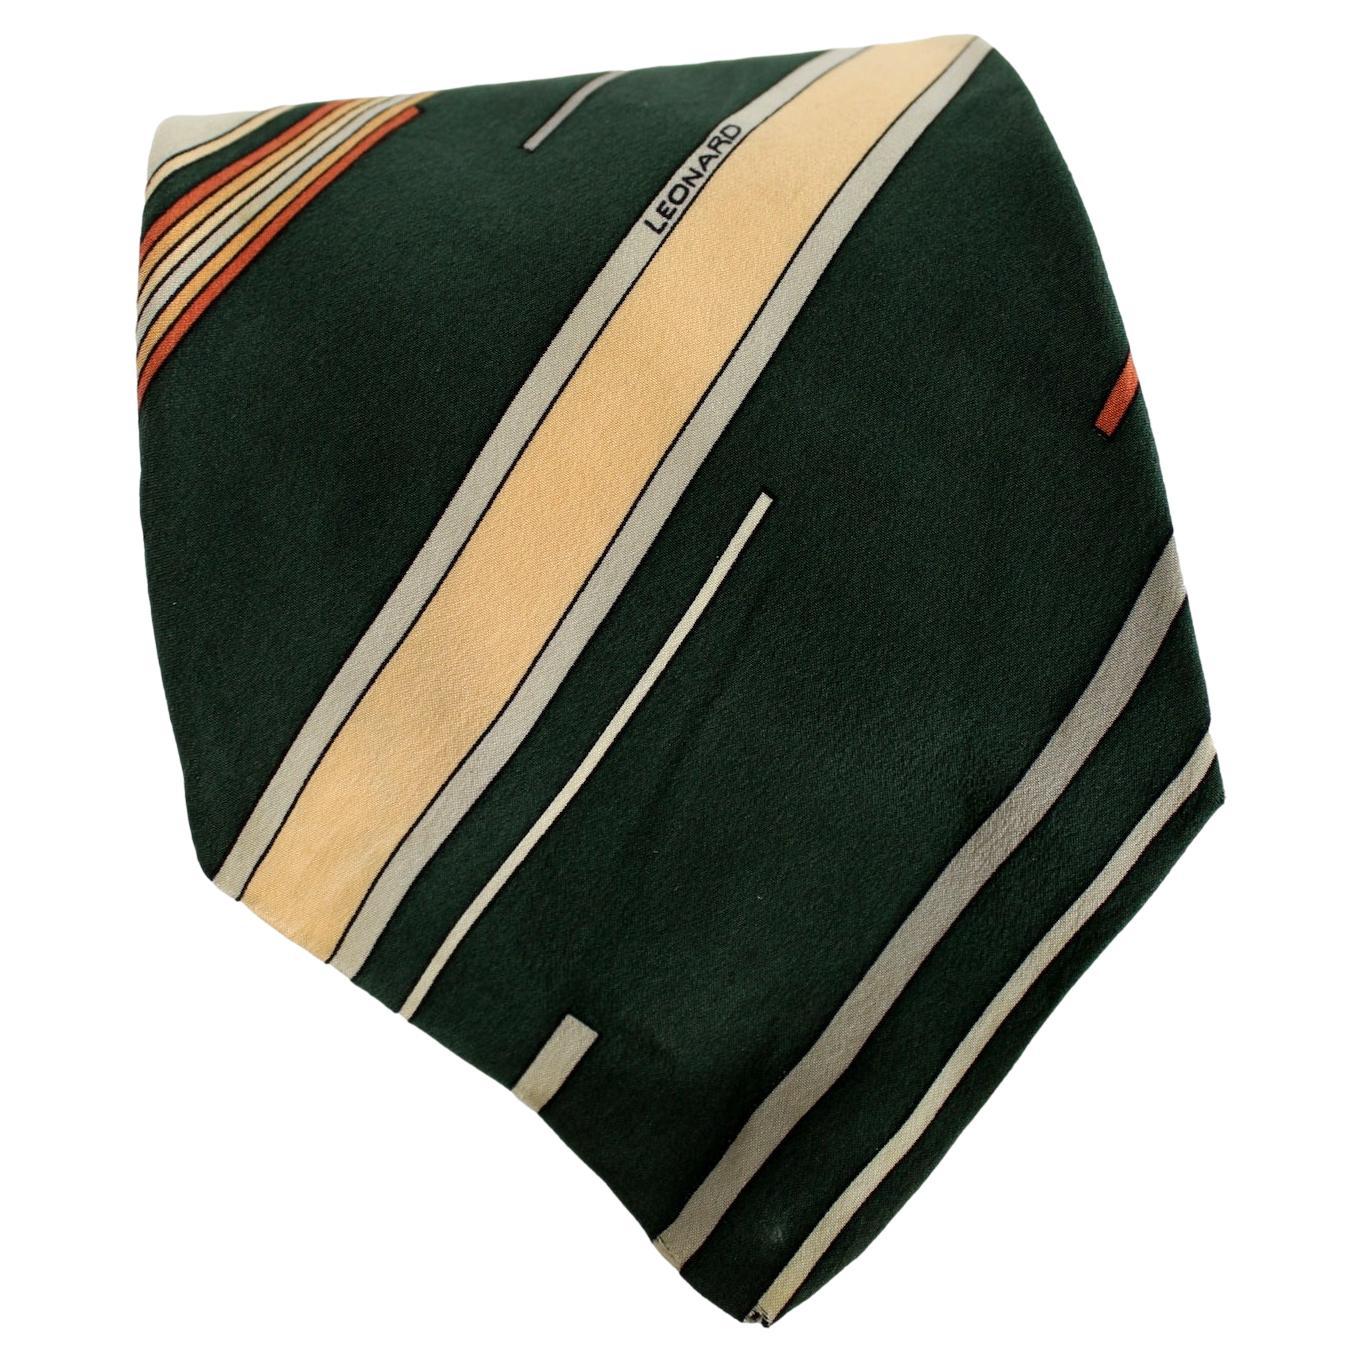 Leonard Cravate vintage à rayures en soie verte et beige